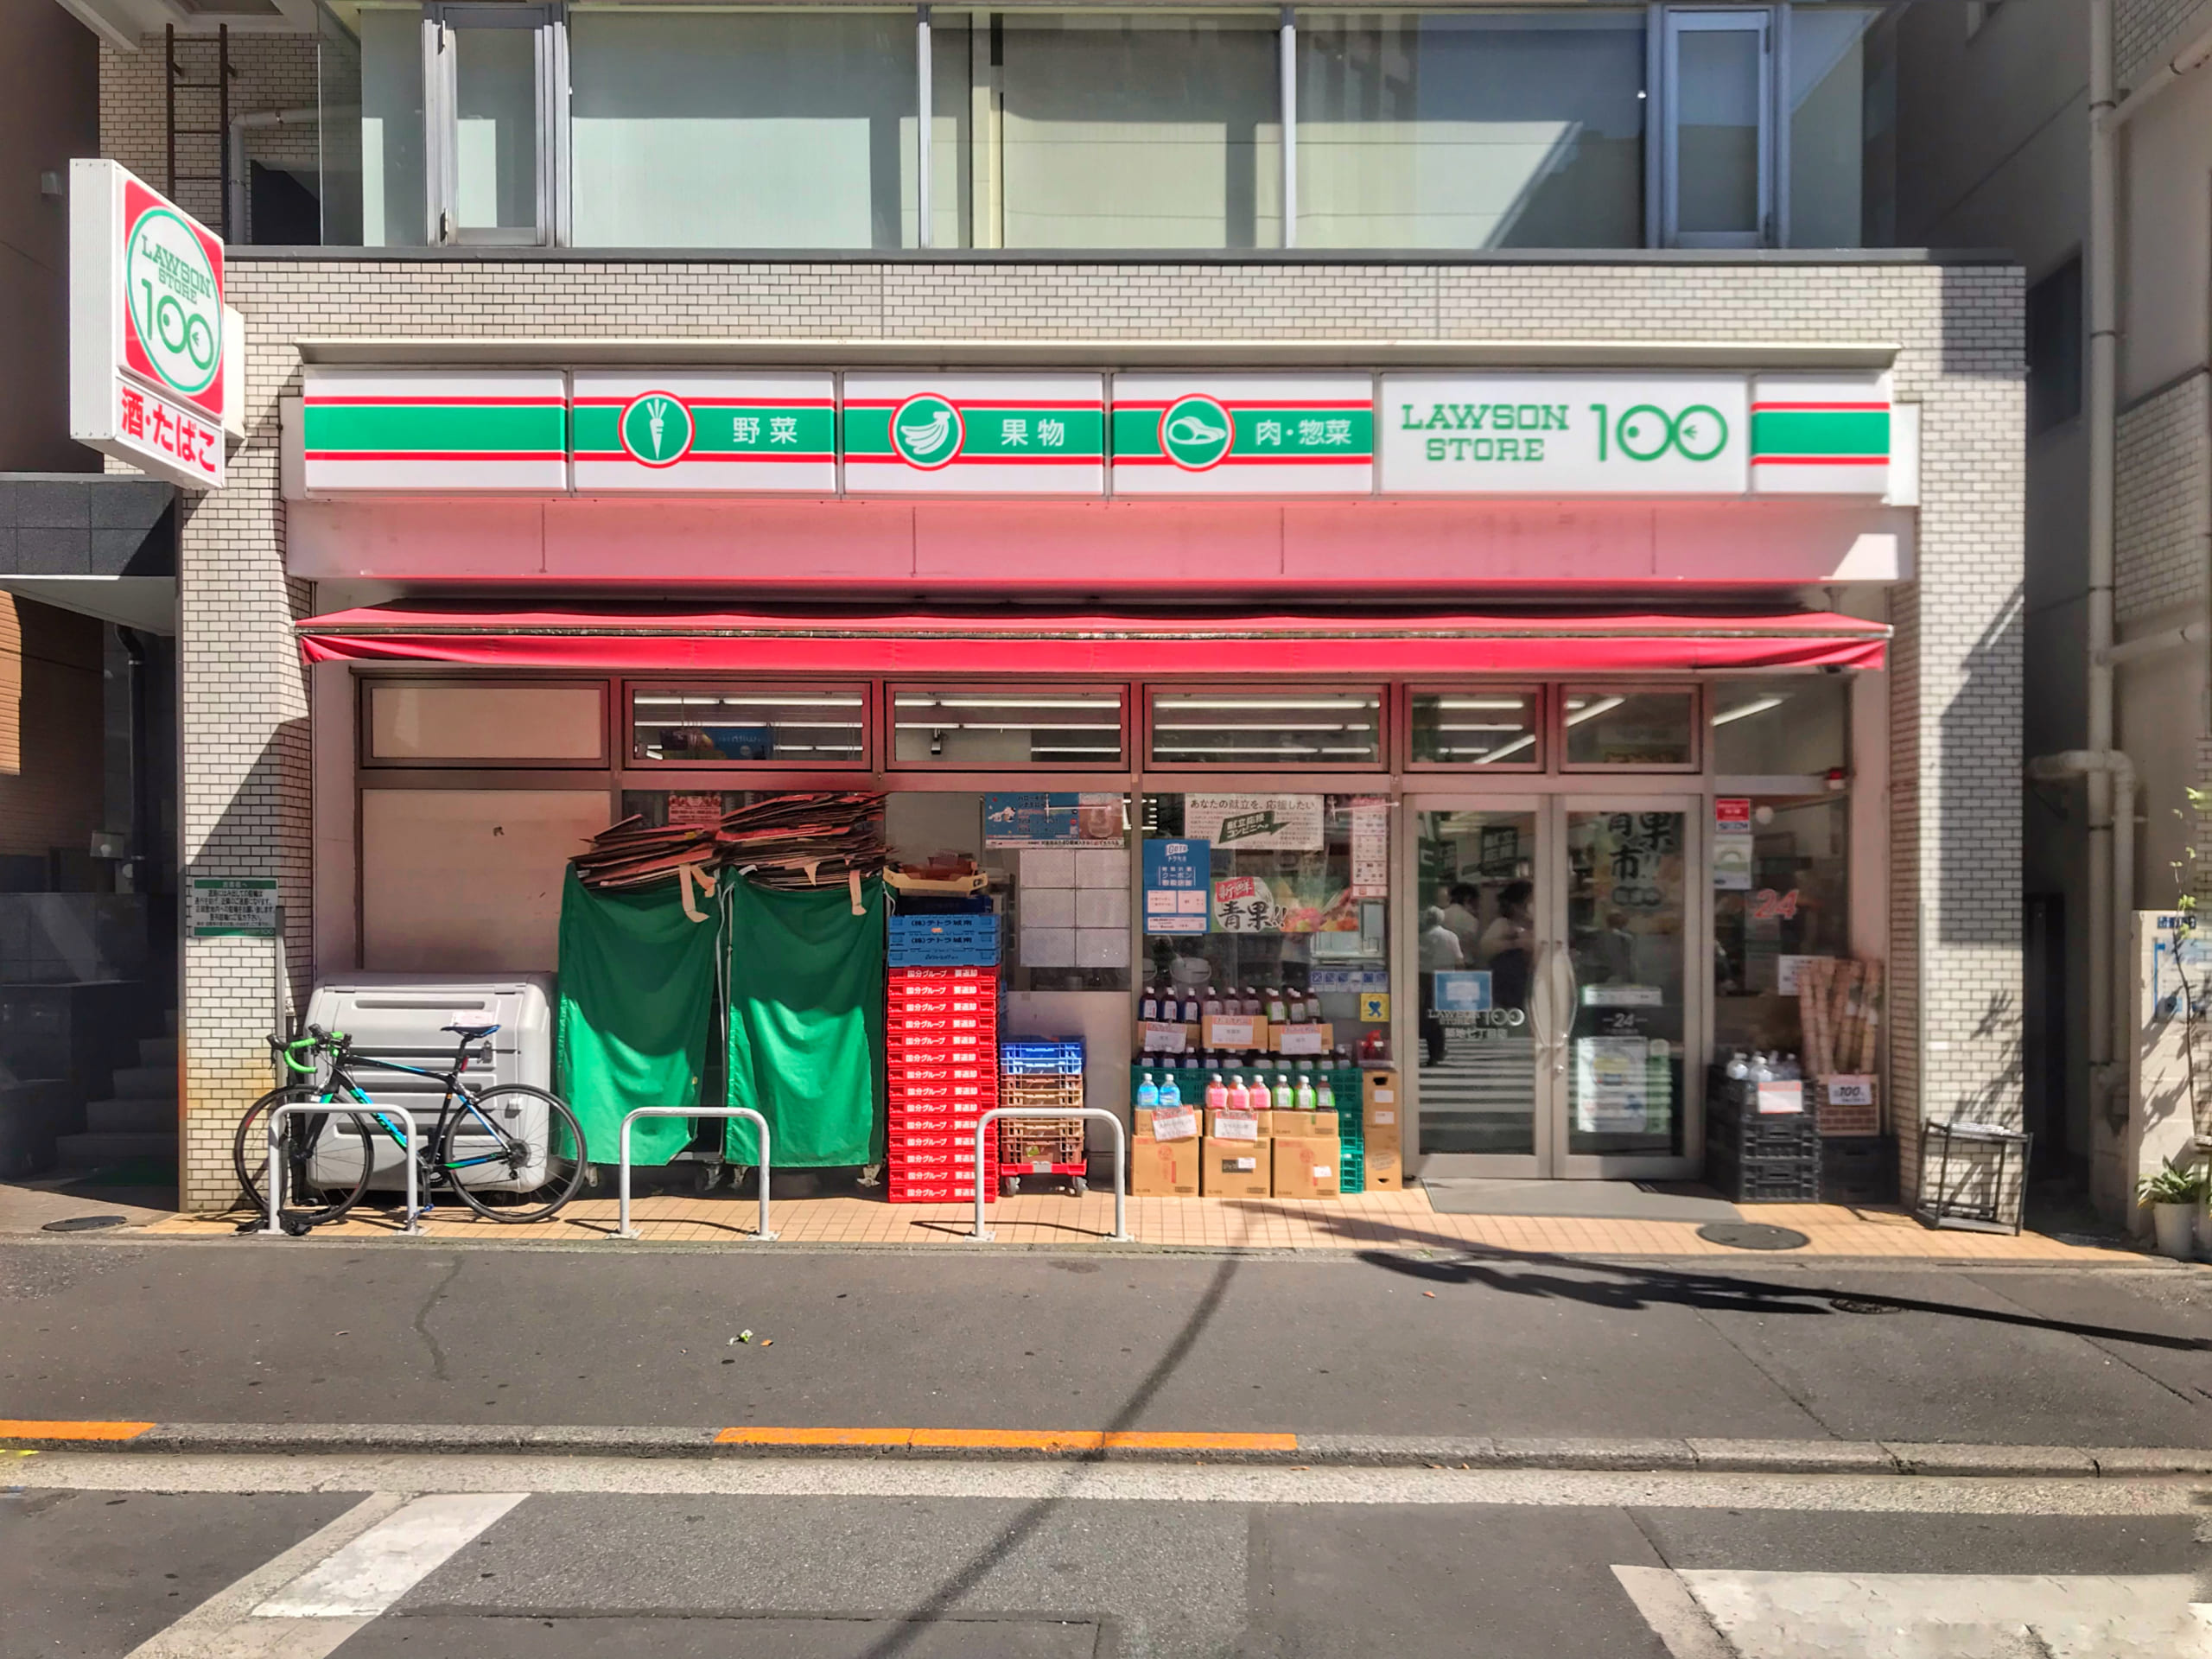 Lawson Store 100